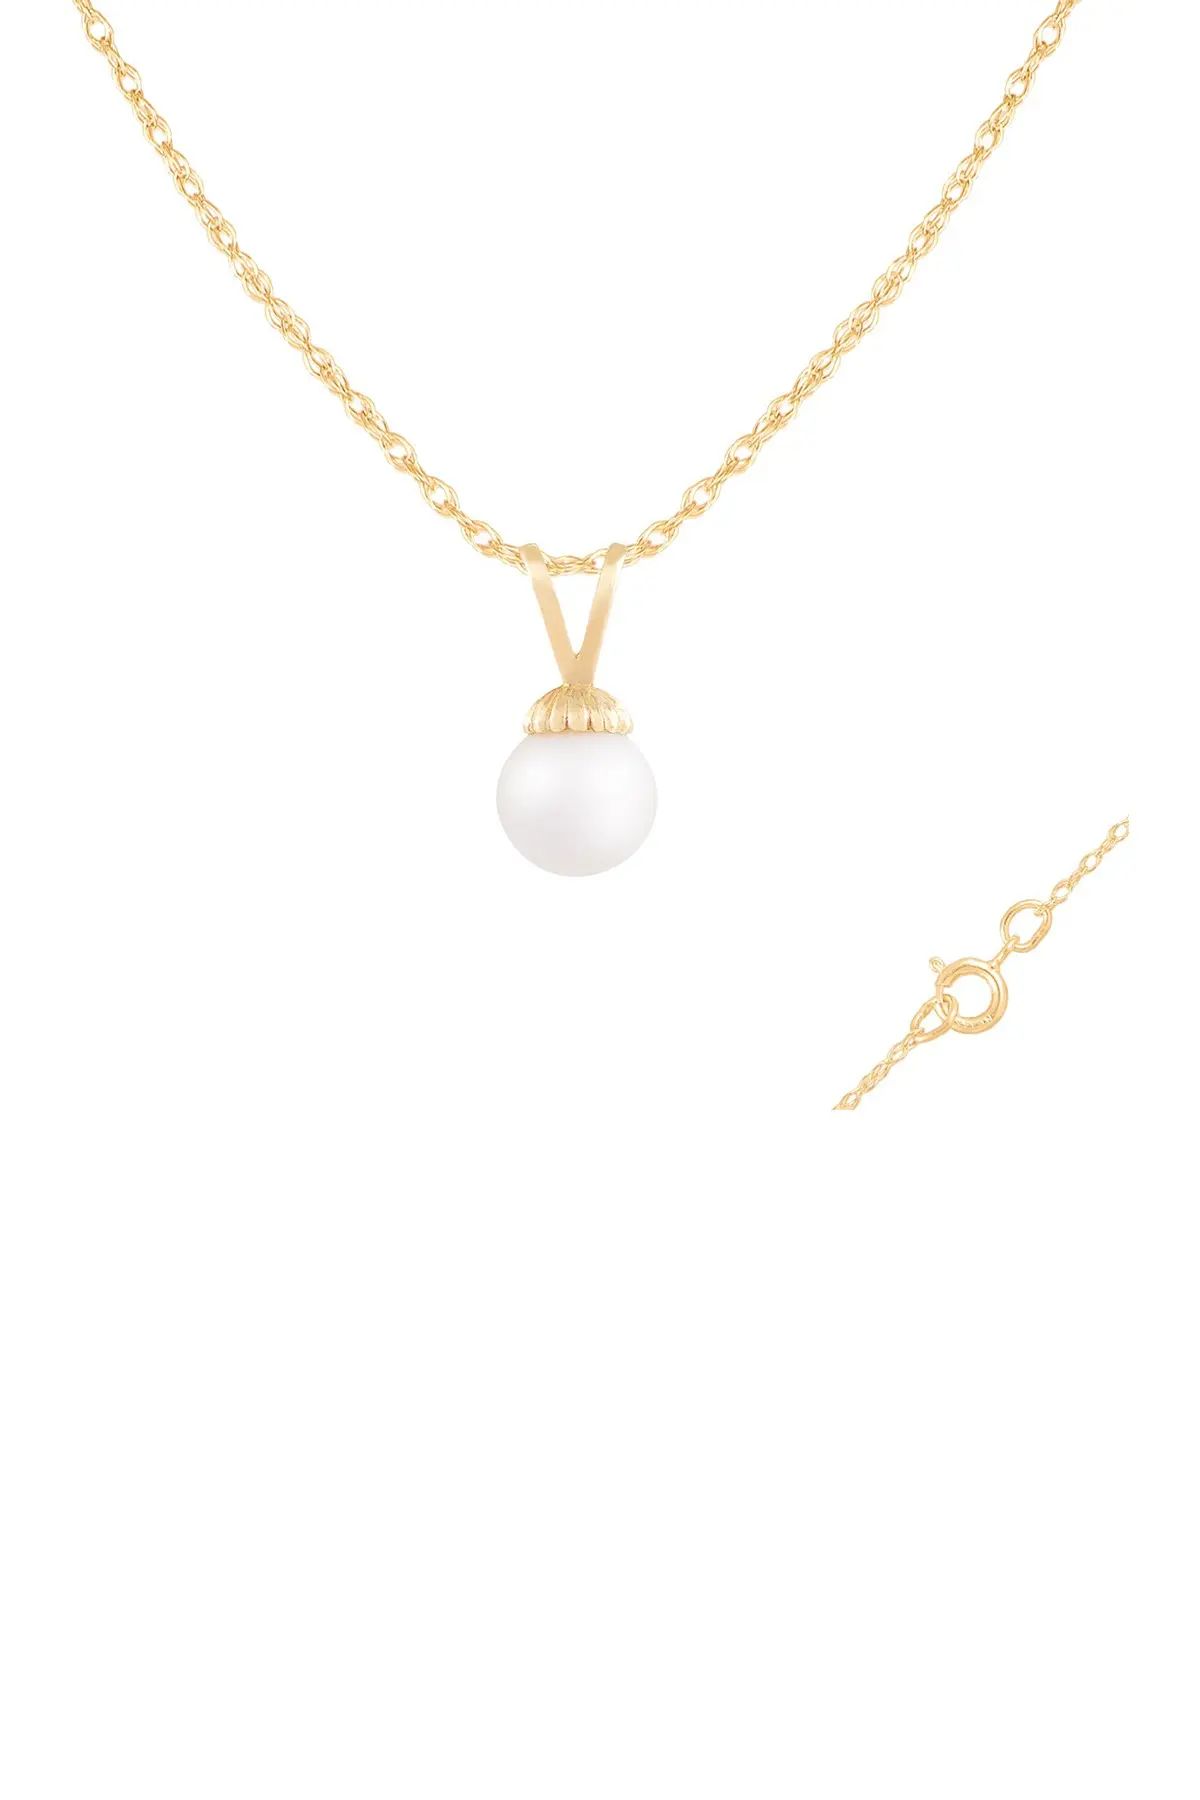 Splendid Pearls 14K Yellow Gold 7-7.5mm Freshwater Pearl Pendant Necklace at Nordstrom Rack | Nordstrom Rack